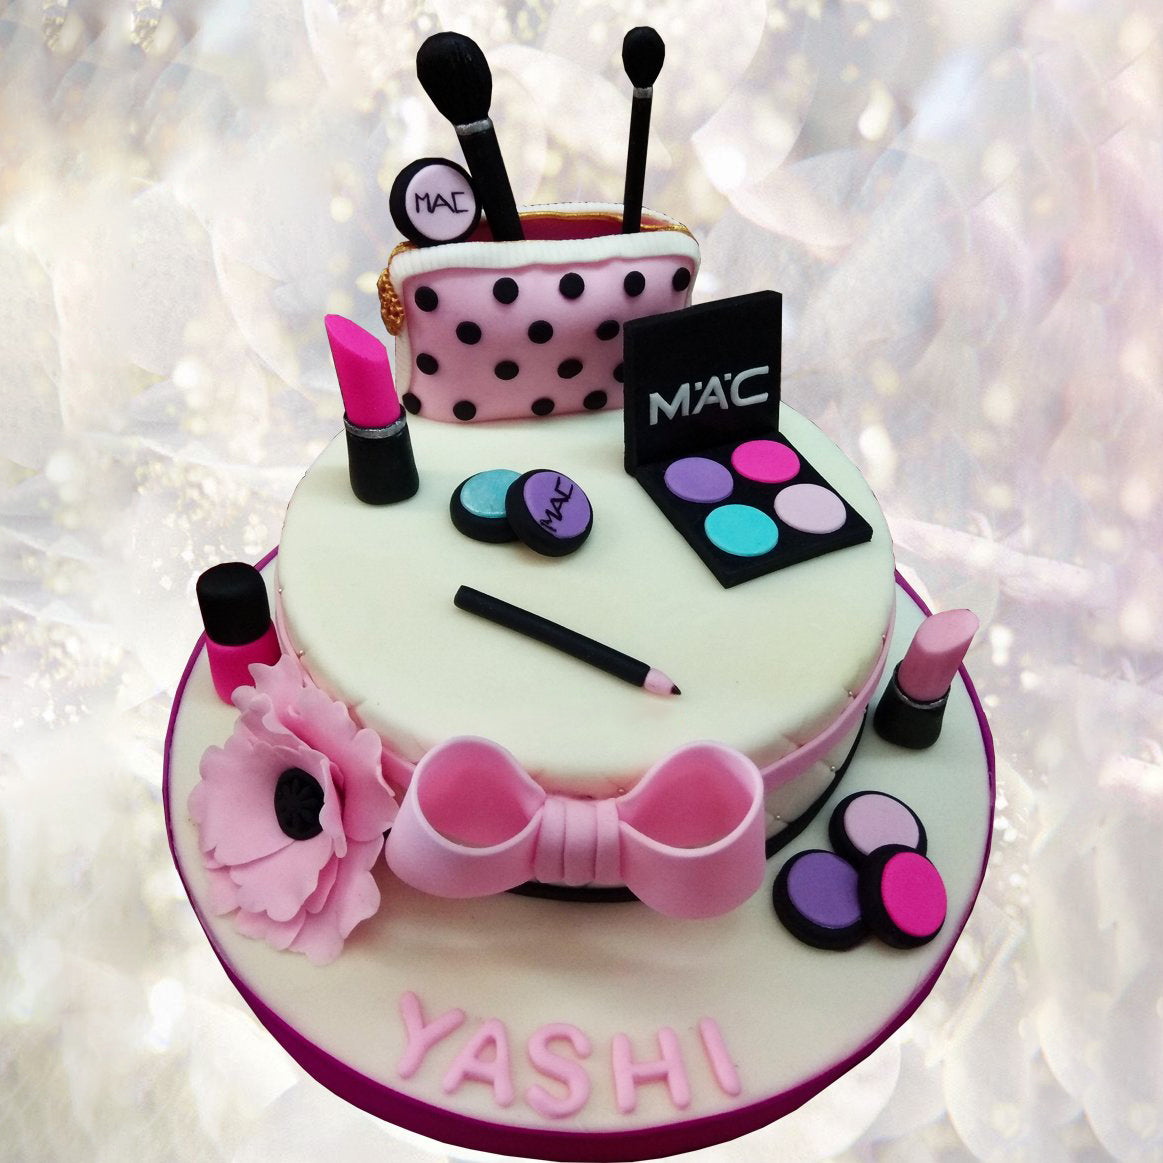 Buy Mac Makeup Cake| Online Cake Delivery - CakeBee